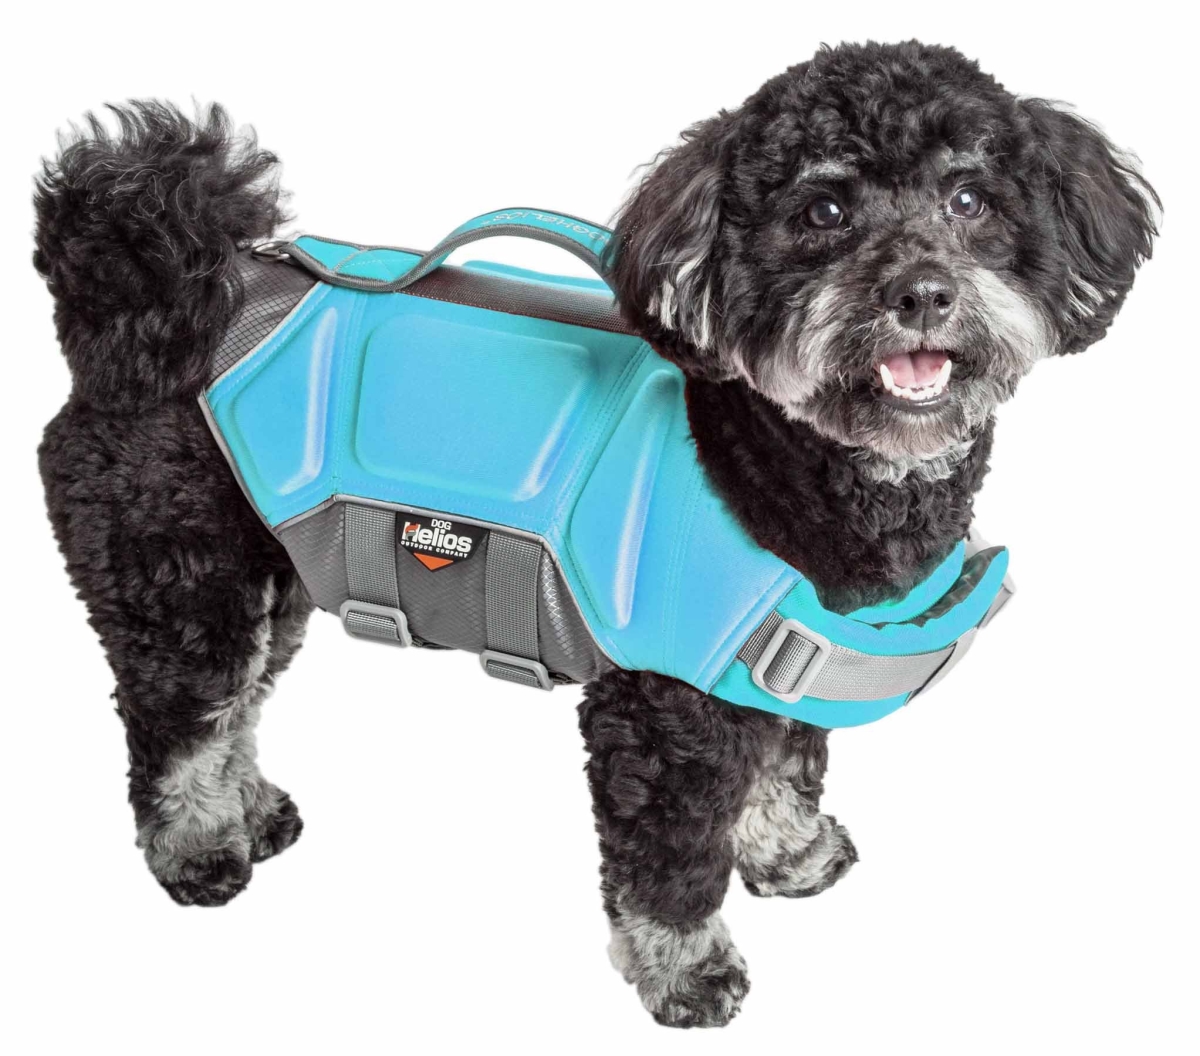 Ha18lbsm Tidal Guard Multi-point Strategically-stitched Reflective Pet Dog Life Jacket Vest - Light Blue, Small